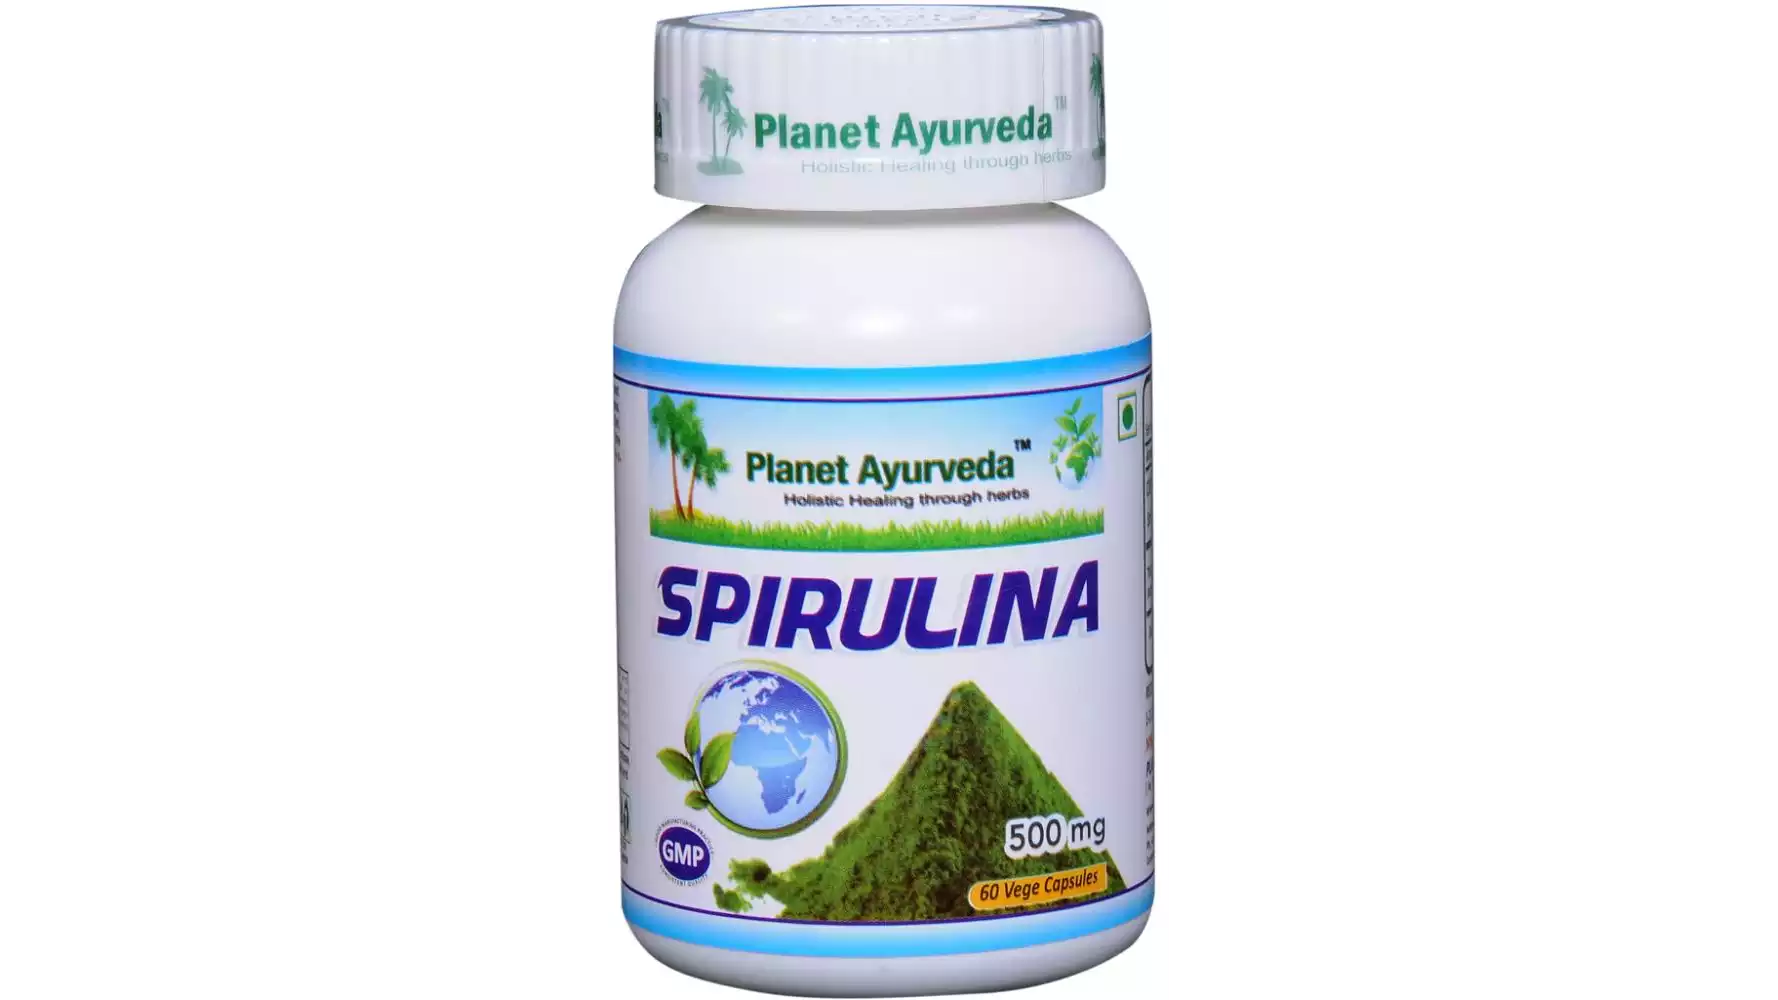 Planet Ayurveda Spirulina Capsule (60caps)